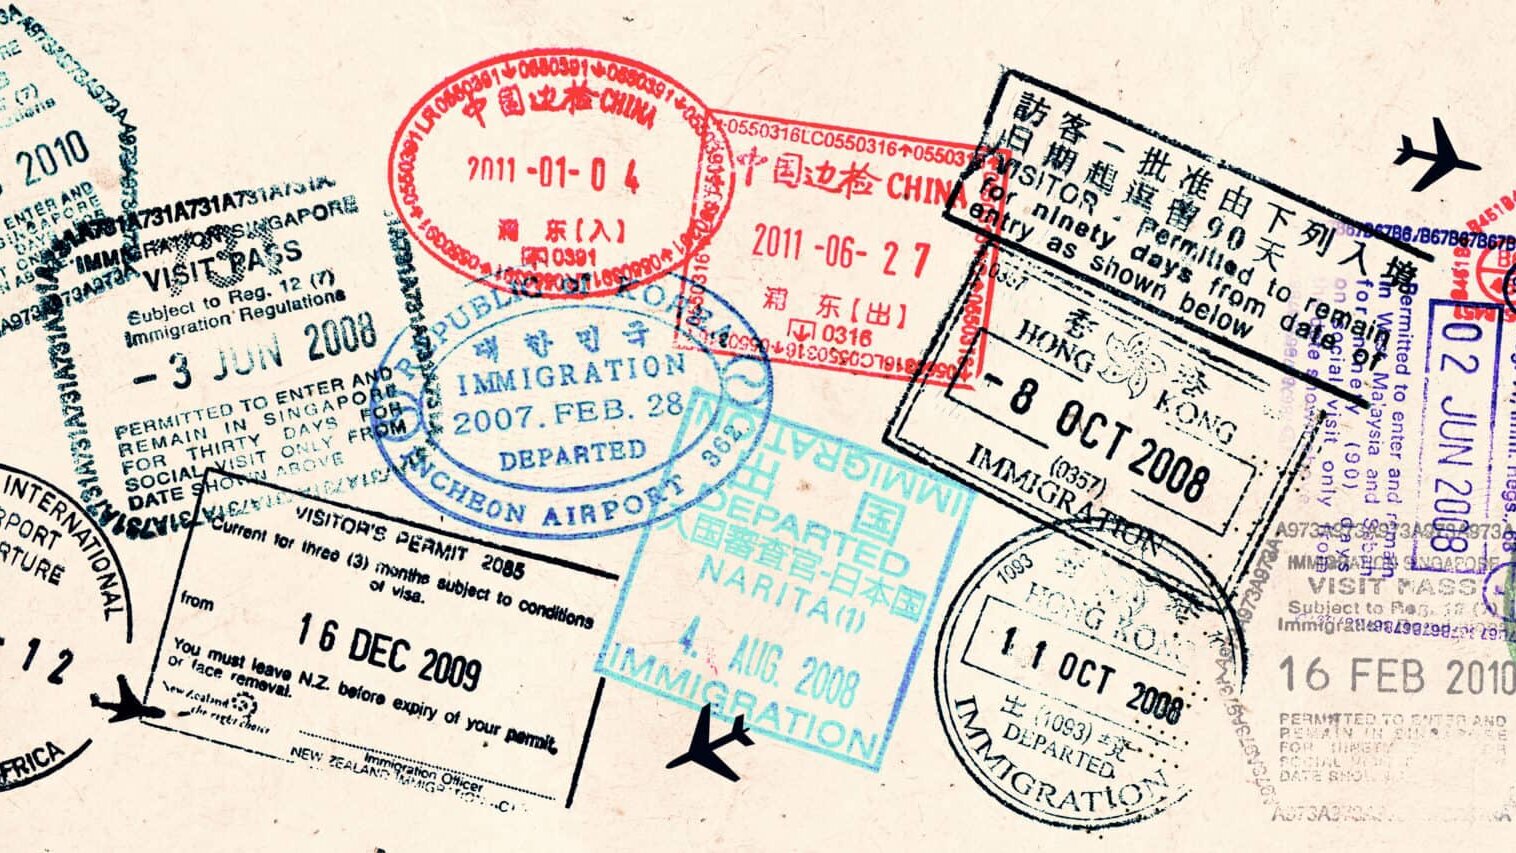 Passport visas stamps on sepia textured, vintage travel collage background